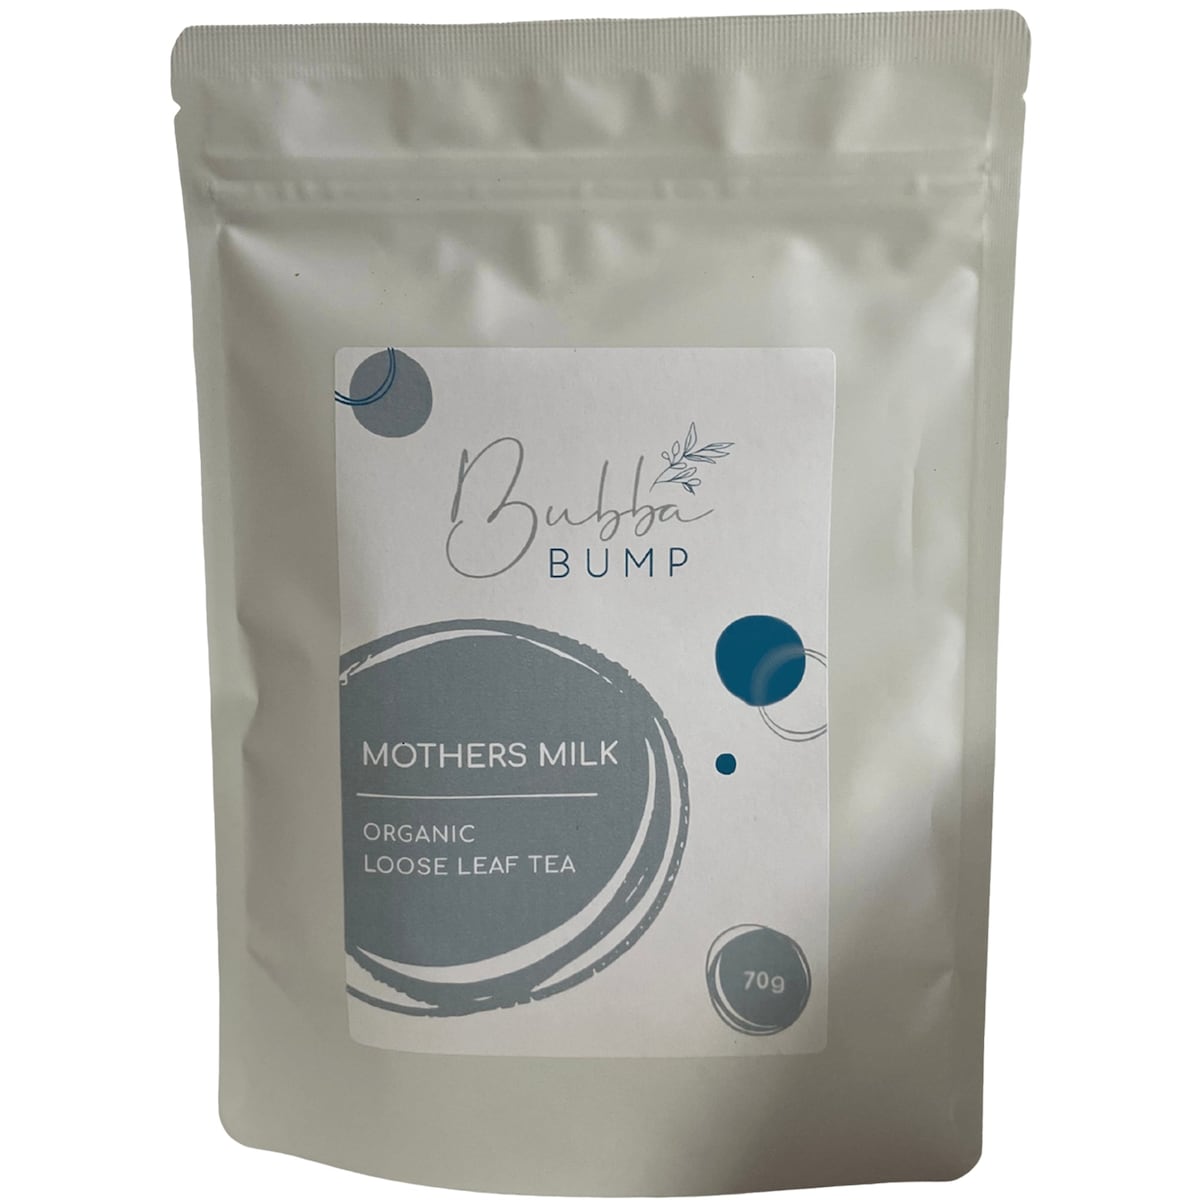 Bubba Bump Organic Mothers Milk Loose Leaf Tea 70g